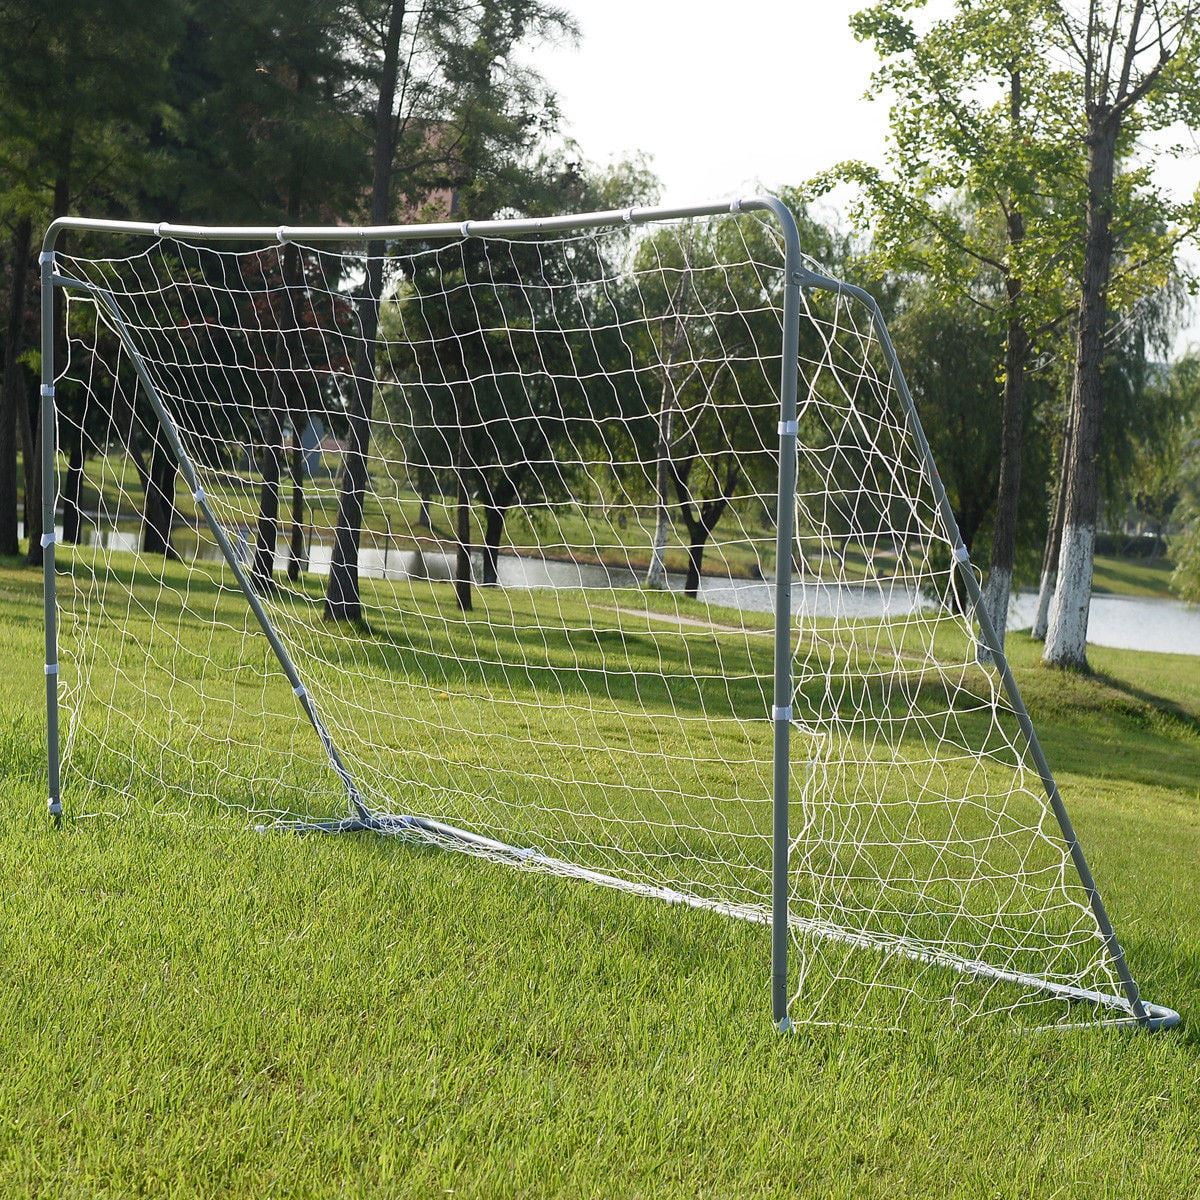 Soccer Goal Football W/Net Straps Anchor Ball Training Sets 12' x 6' 8*24ft FG 